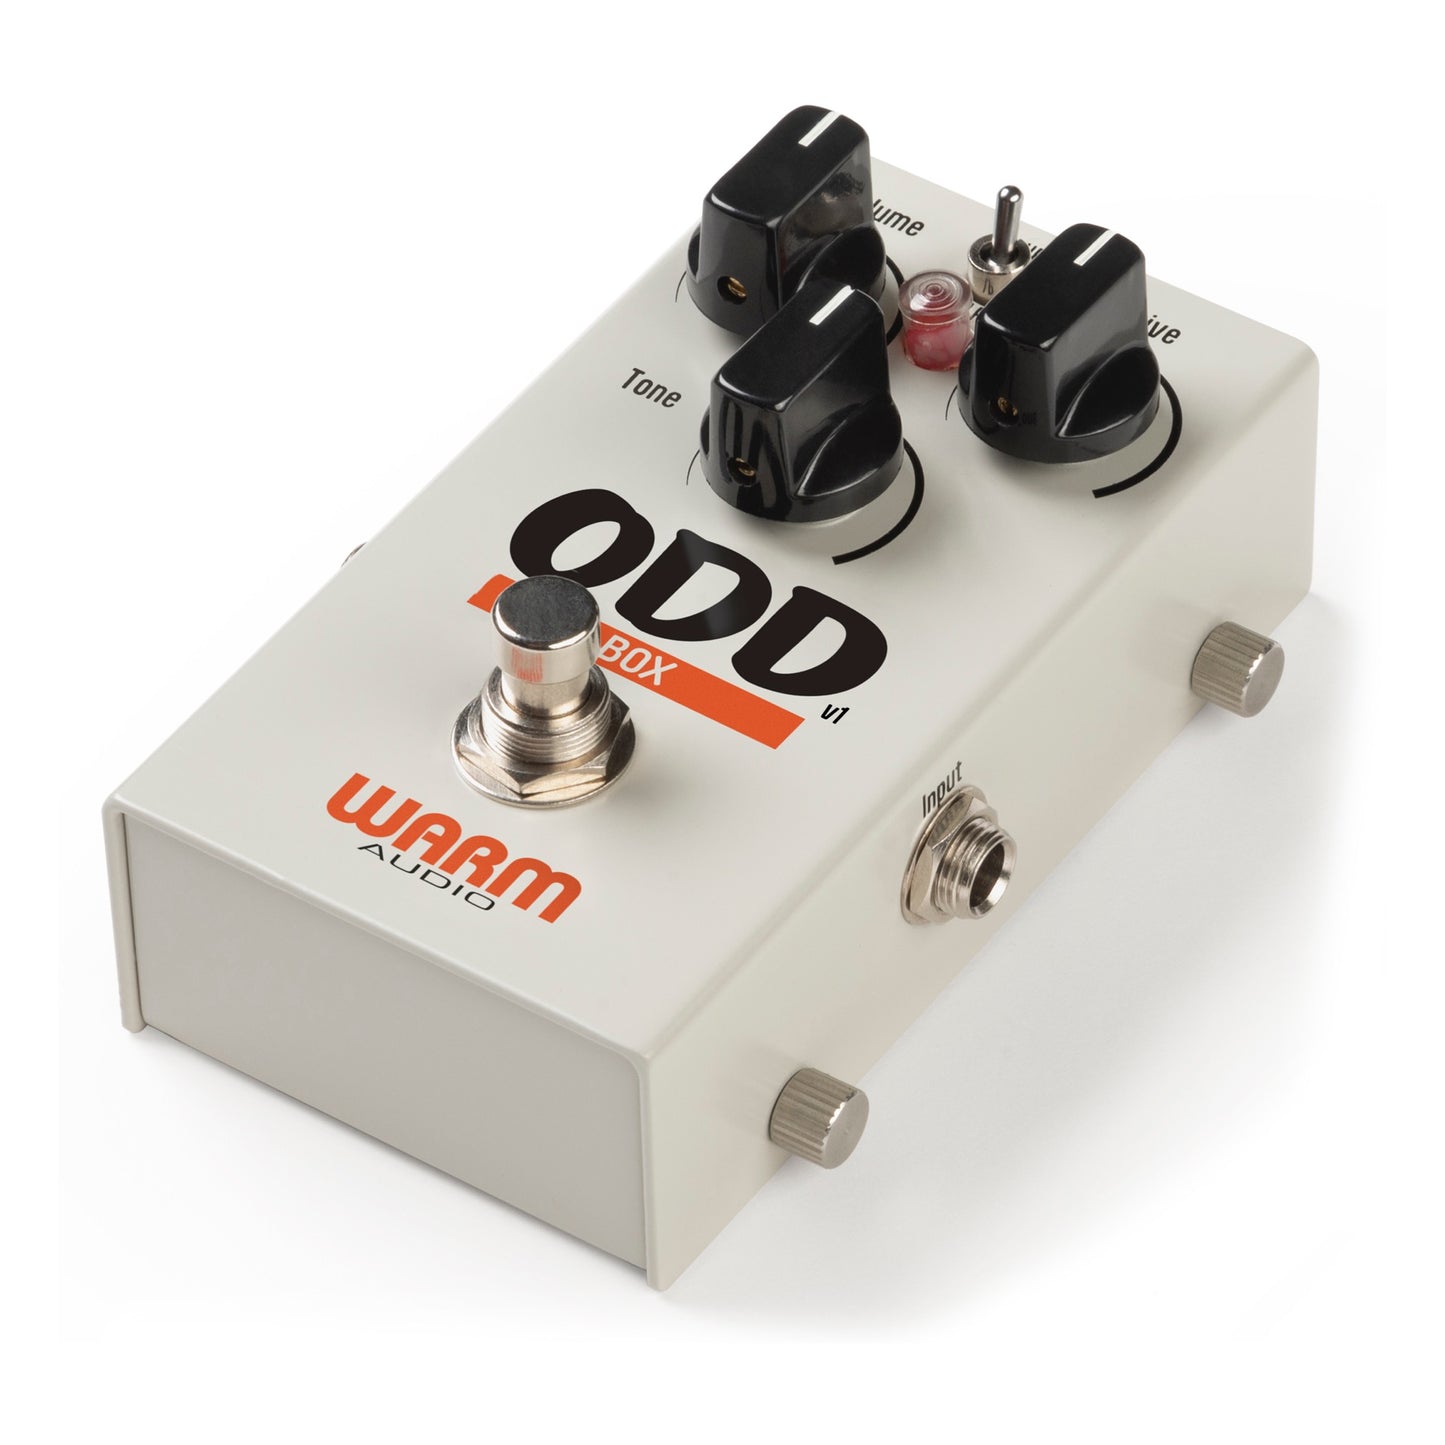 Warm Audio Odd Box Overdrive Pedal